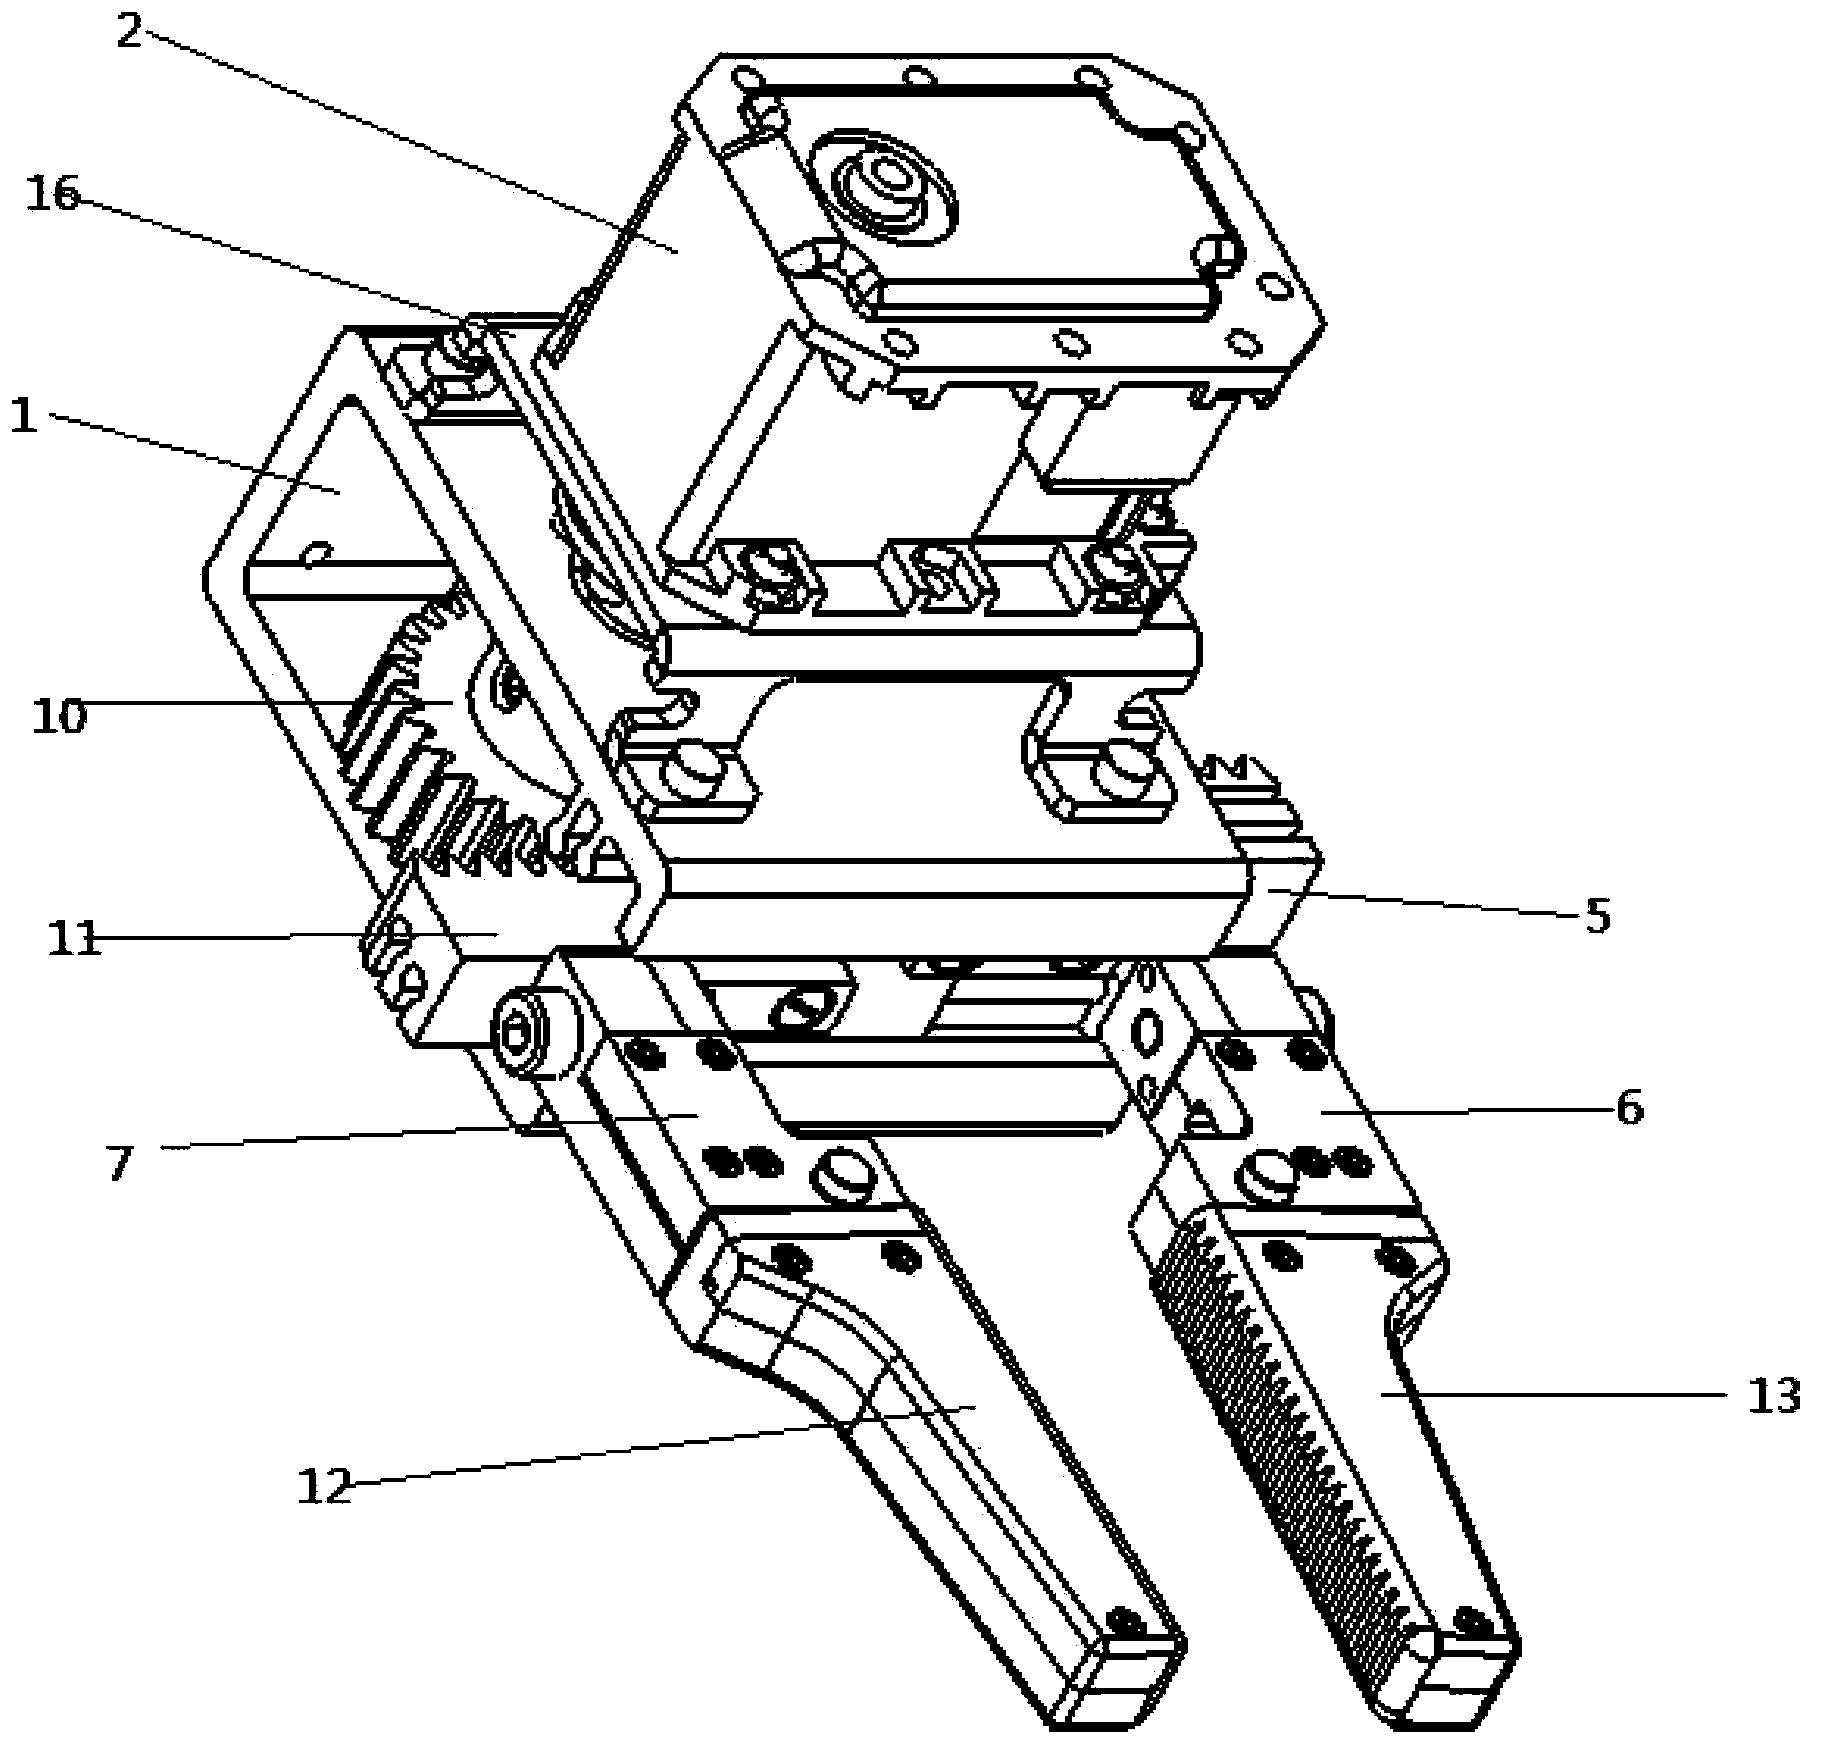 Two-finger translation mechanical arm